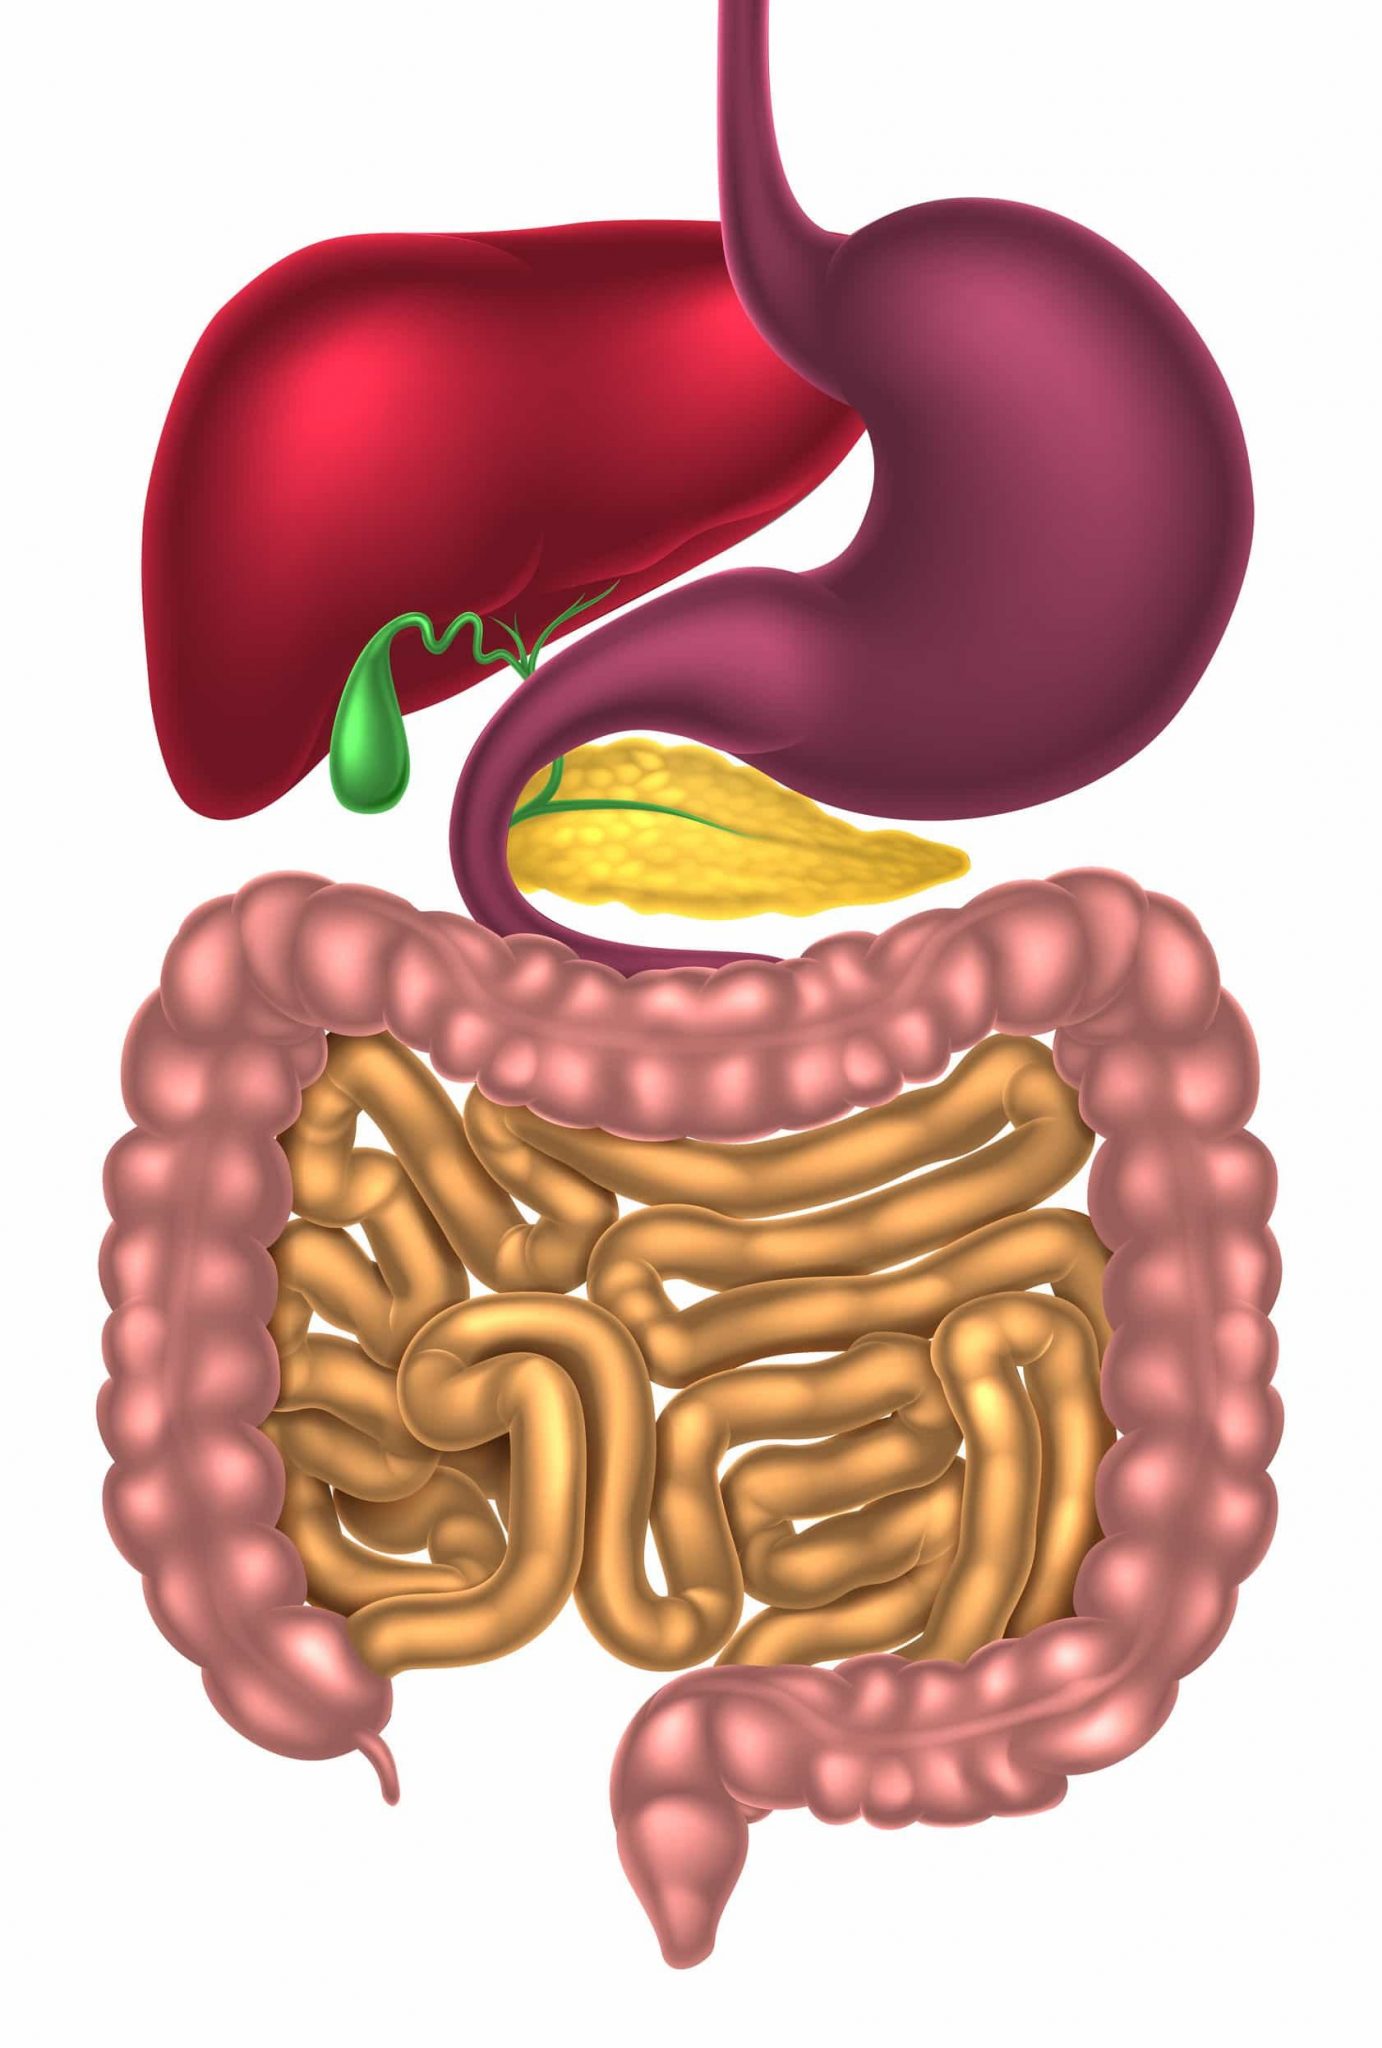 Органы желудок кишечник печень. Печень и желудочно-кишечный тракт. Желудок и кишечник человека. Печень желудок кишечник.